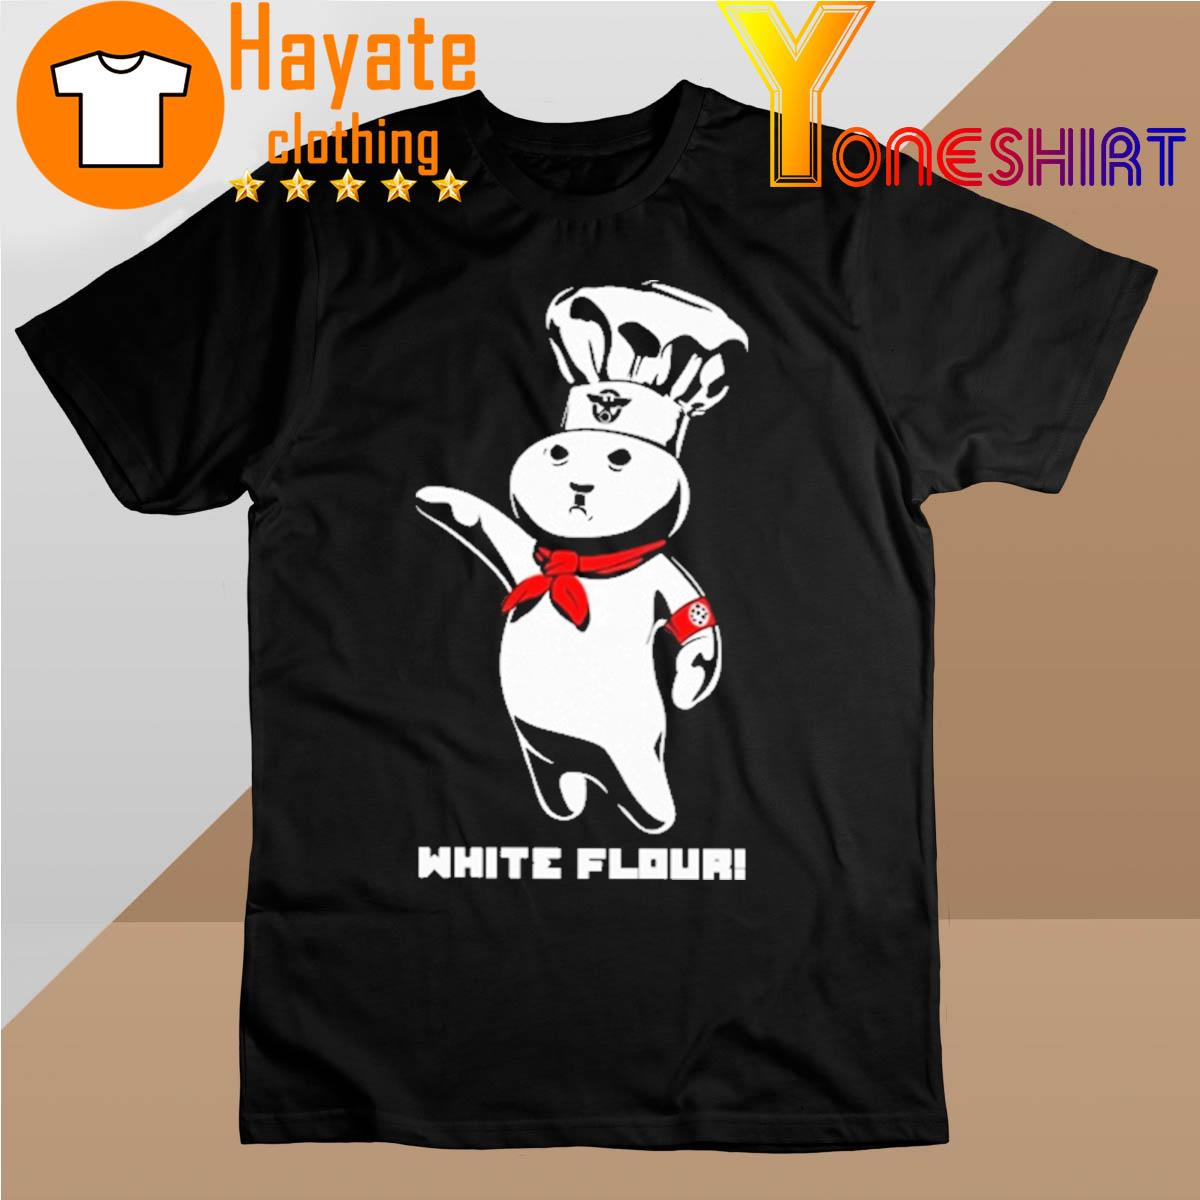 White Flour Shirt